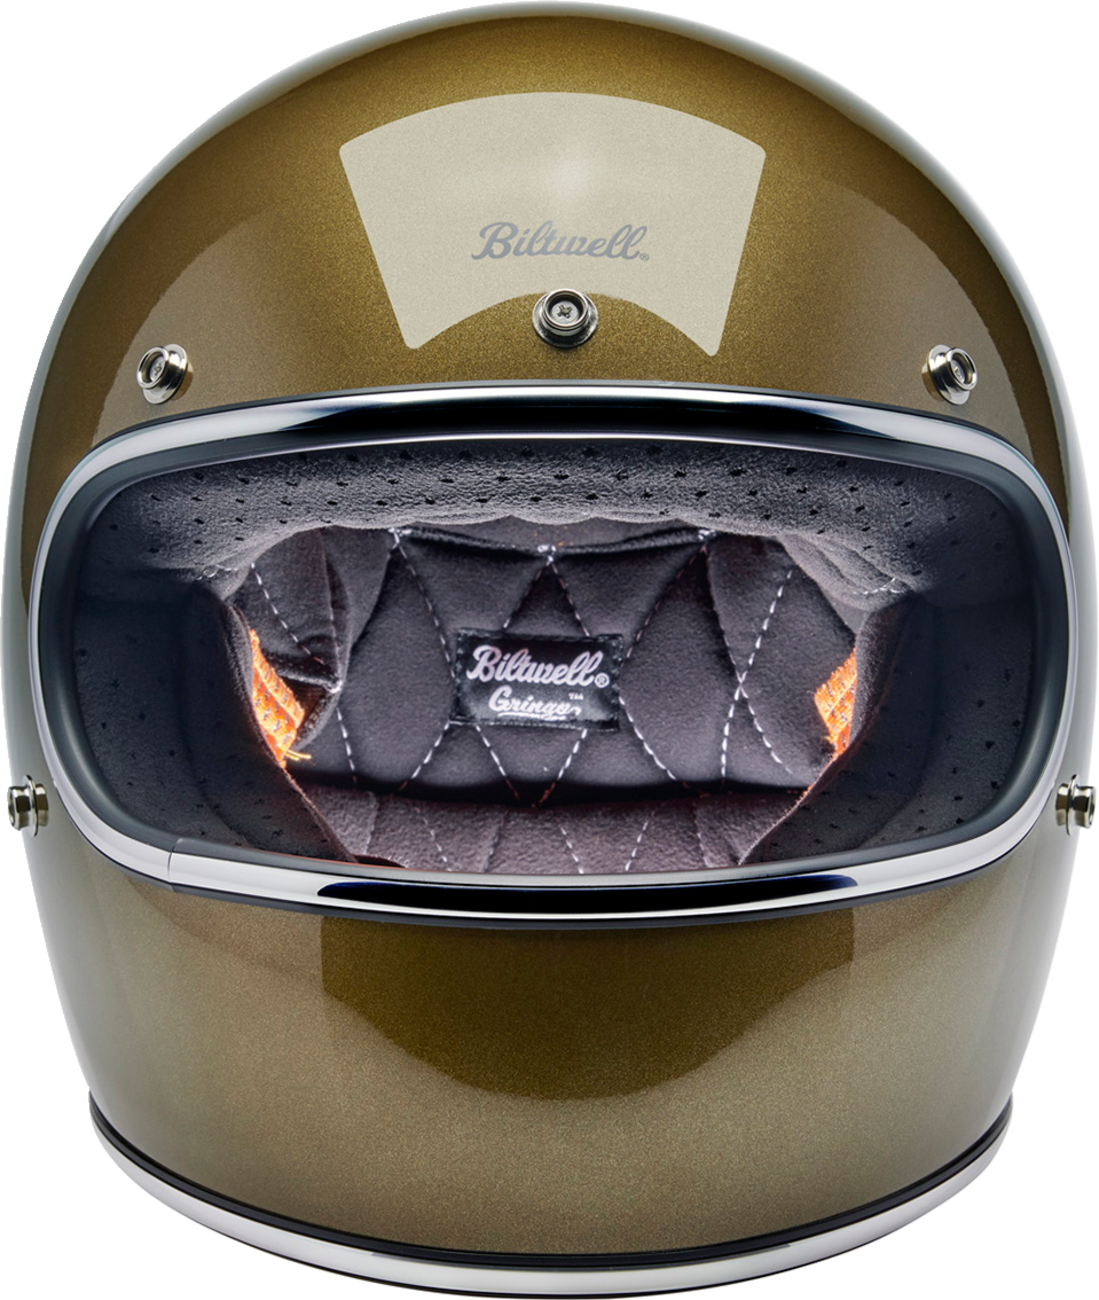 BILTWELL Gringo Helmet - Ugly Gold - Medium 1002-363-503